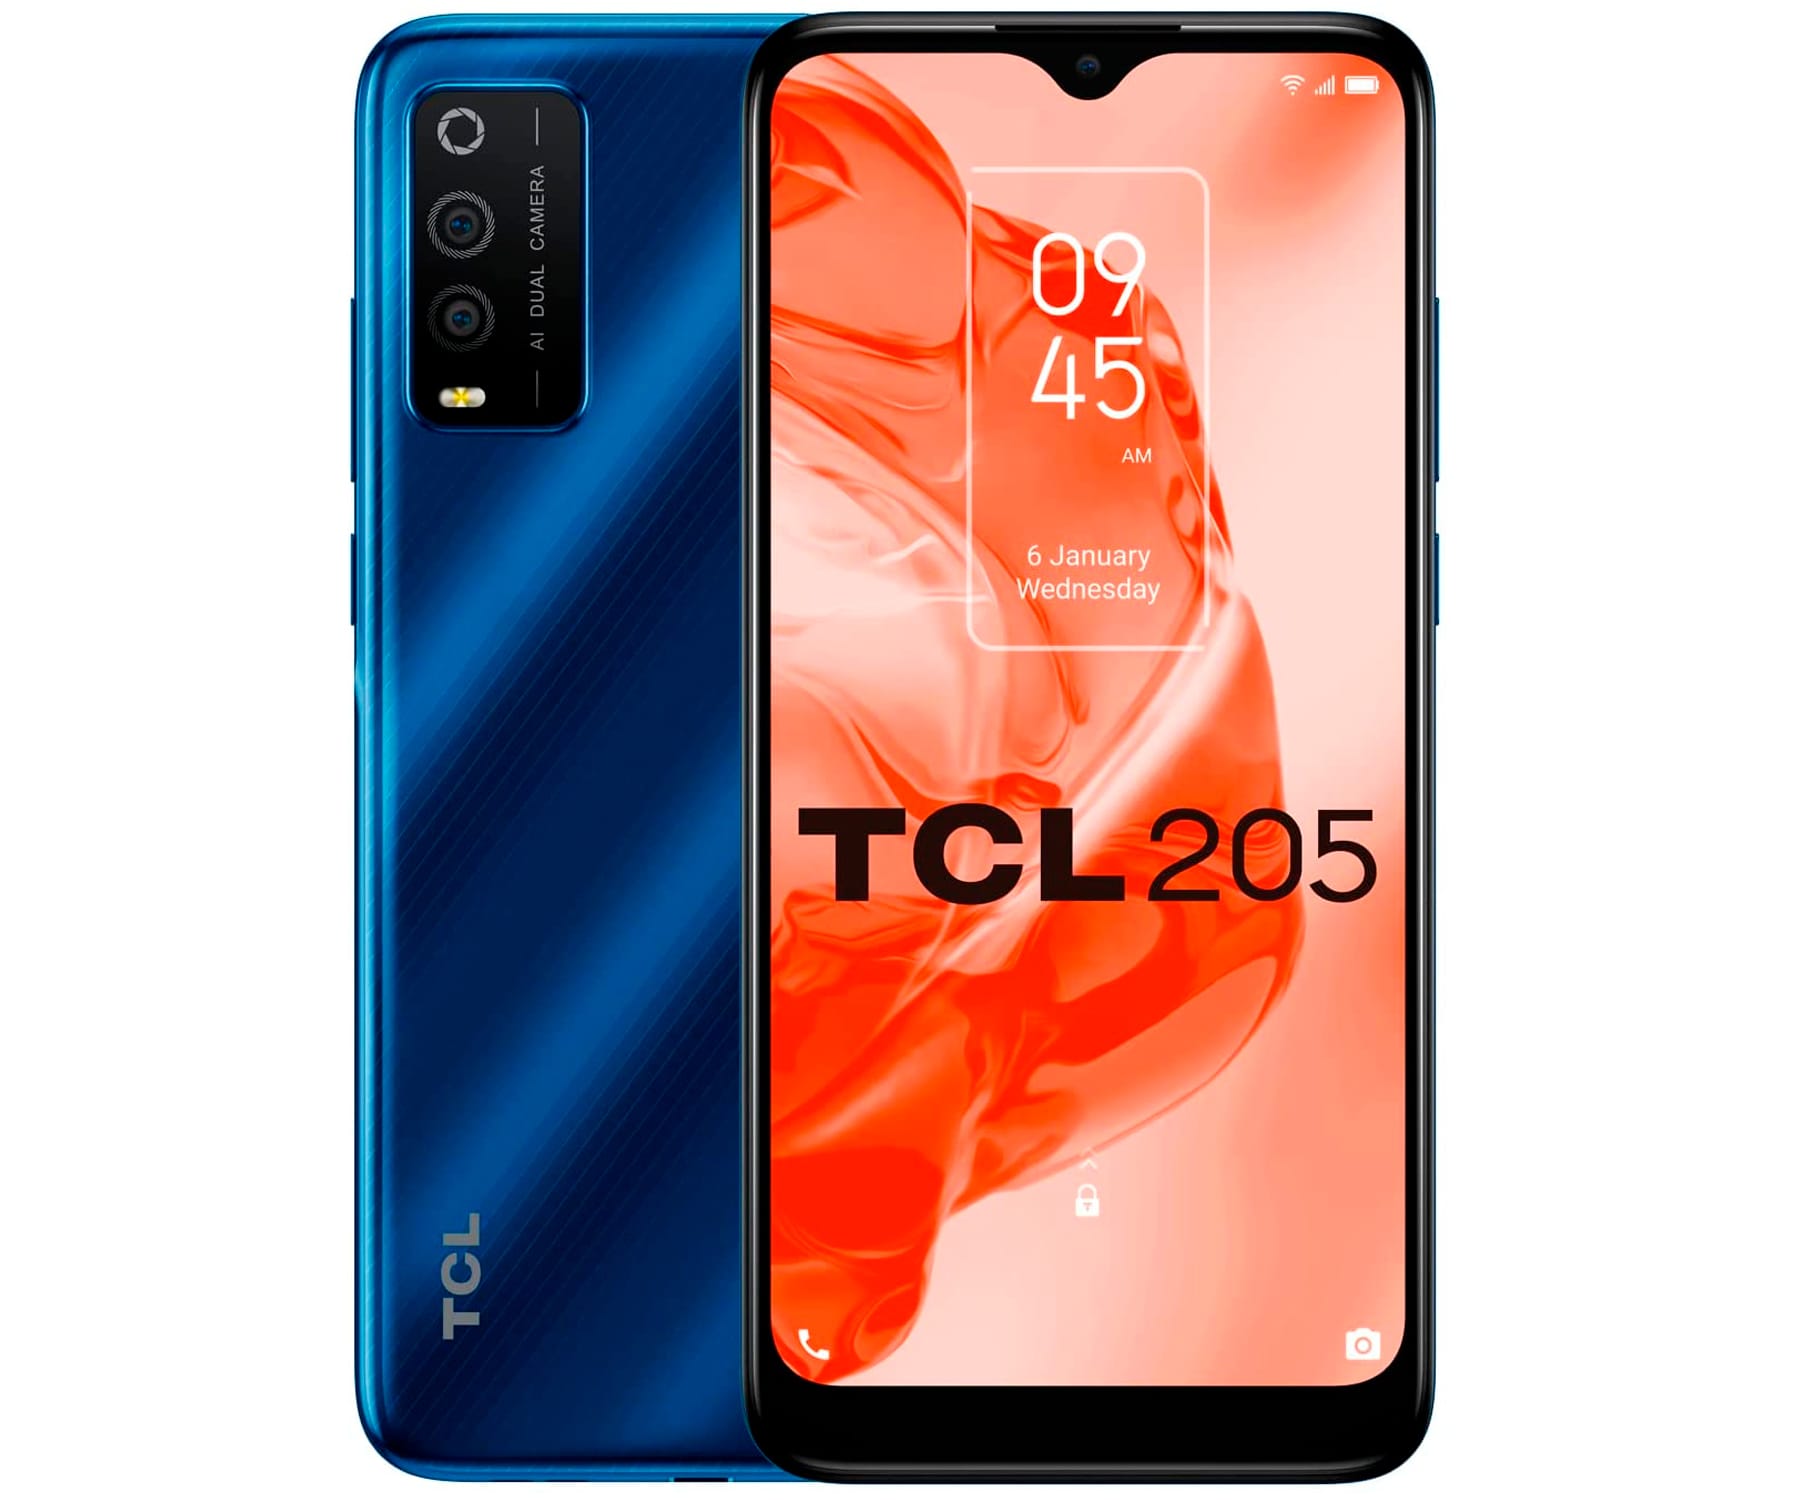 TCL 205 Azul (Atlantic blue) / 2+32GB / 5.22